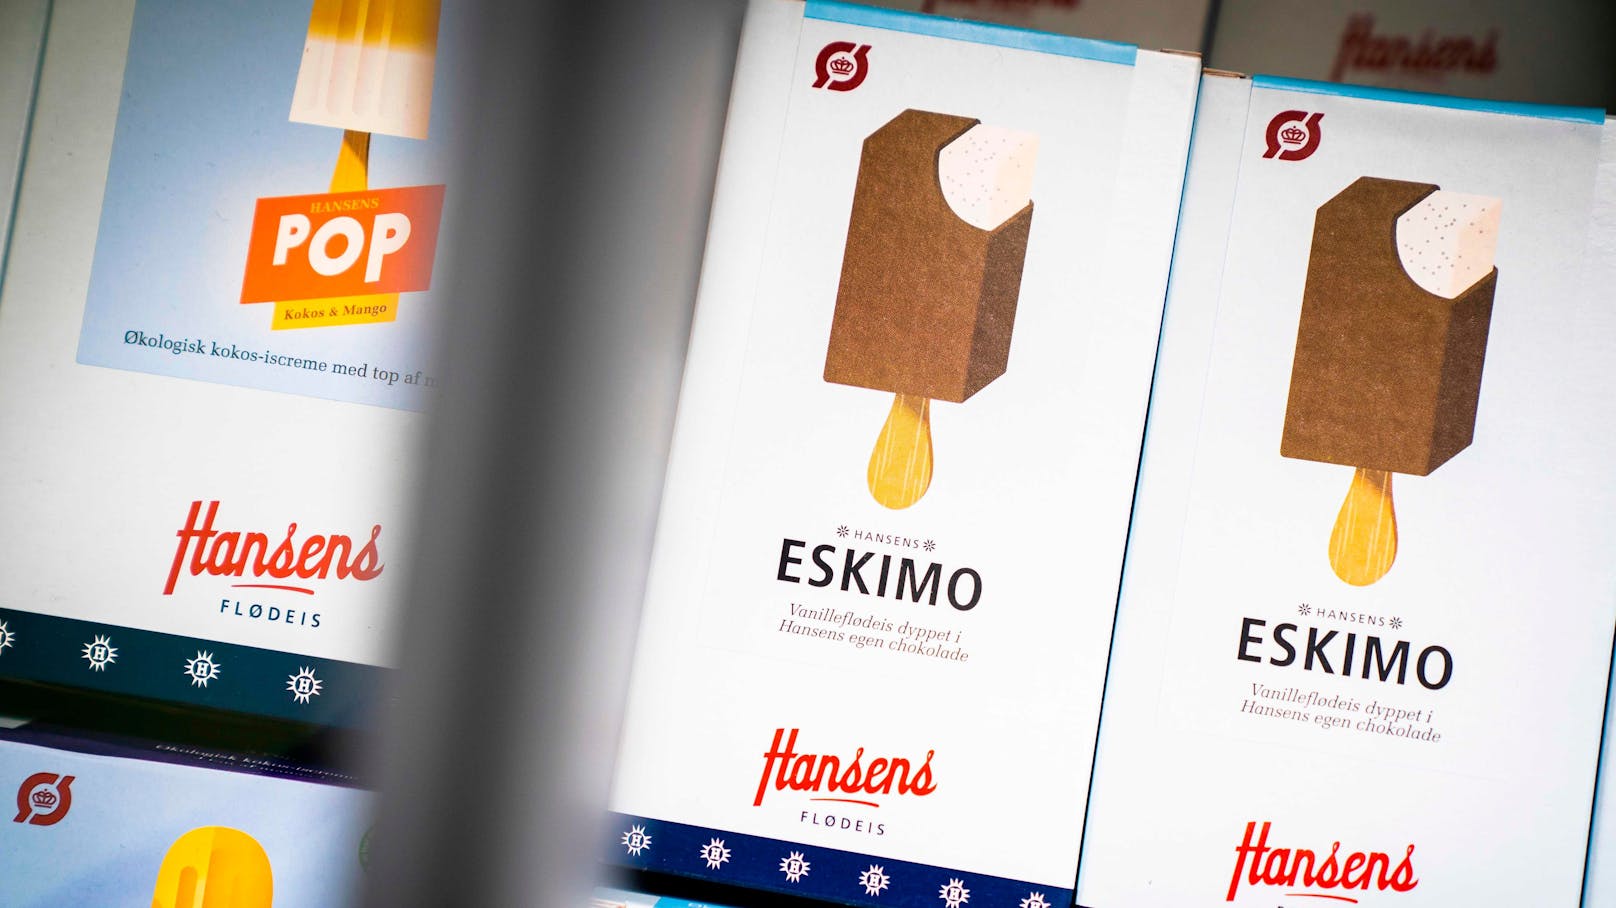 Der dänische Hersteller "Hansens", ändert nun Produktname